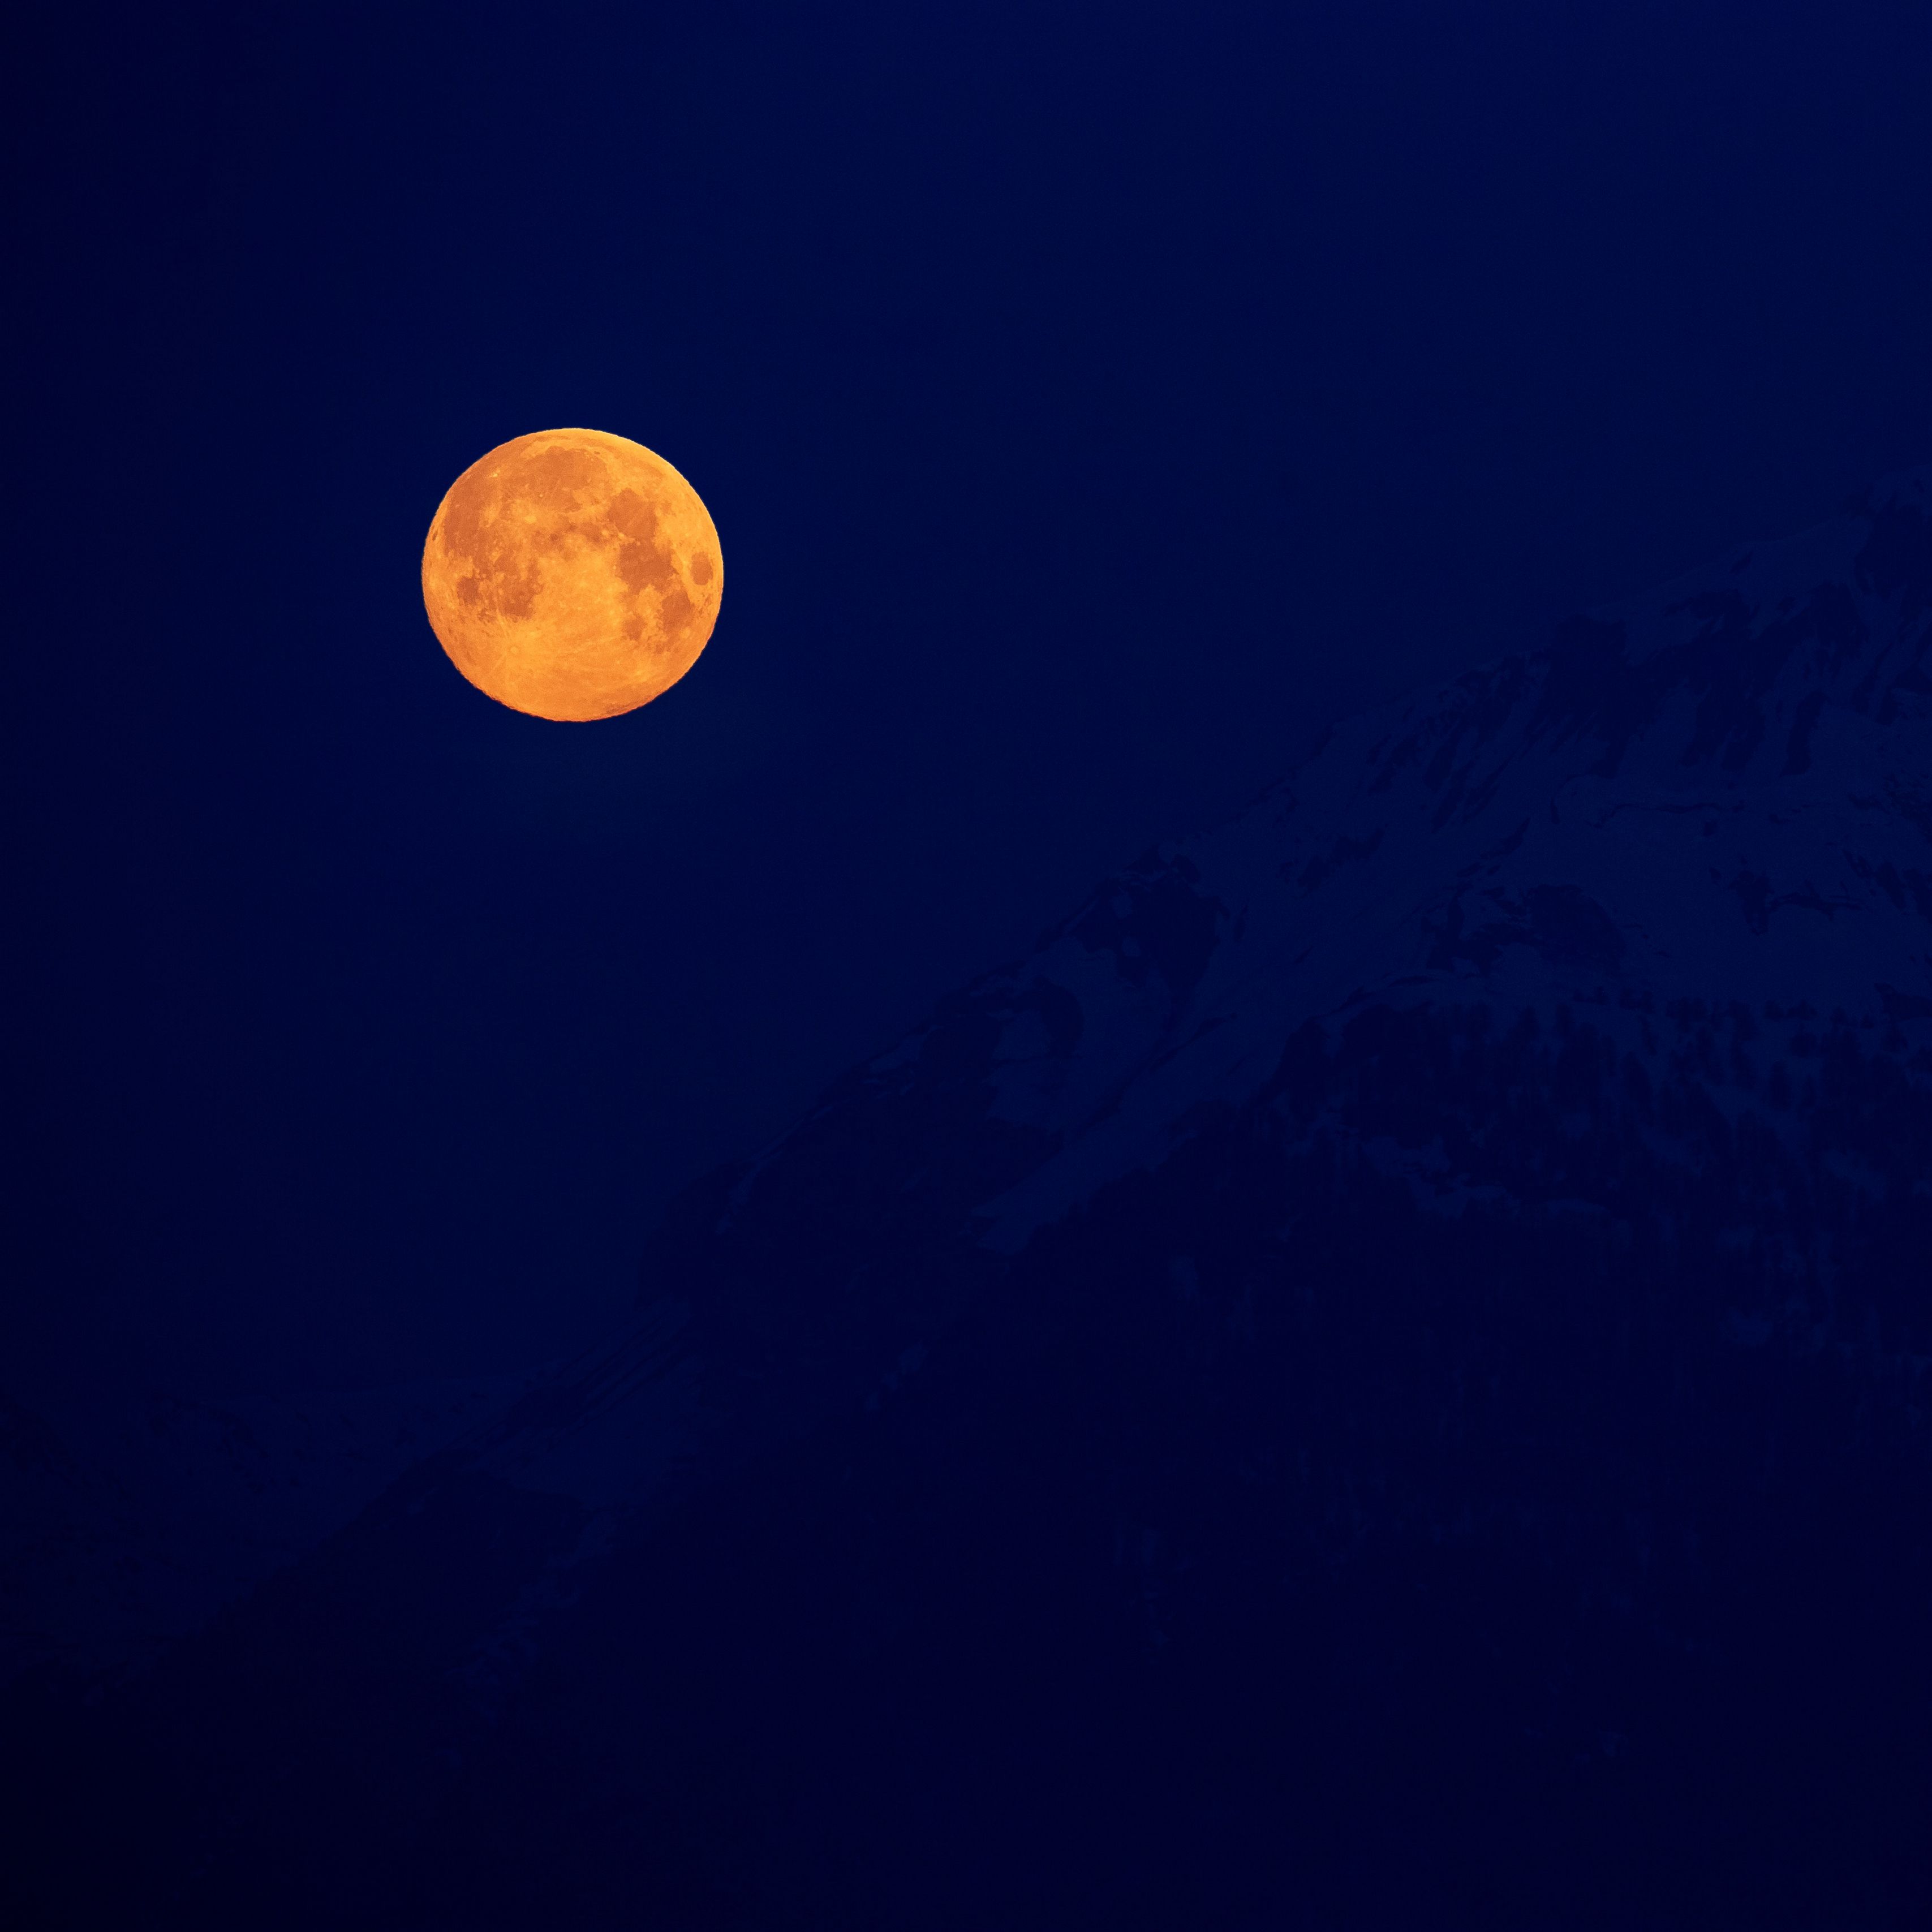 Download wallpaper 3415x3415 moon, full moon, night, mountains